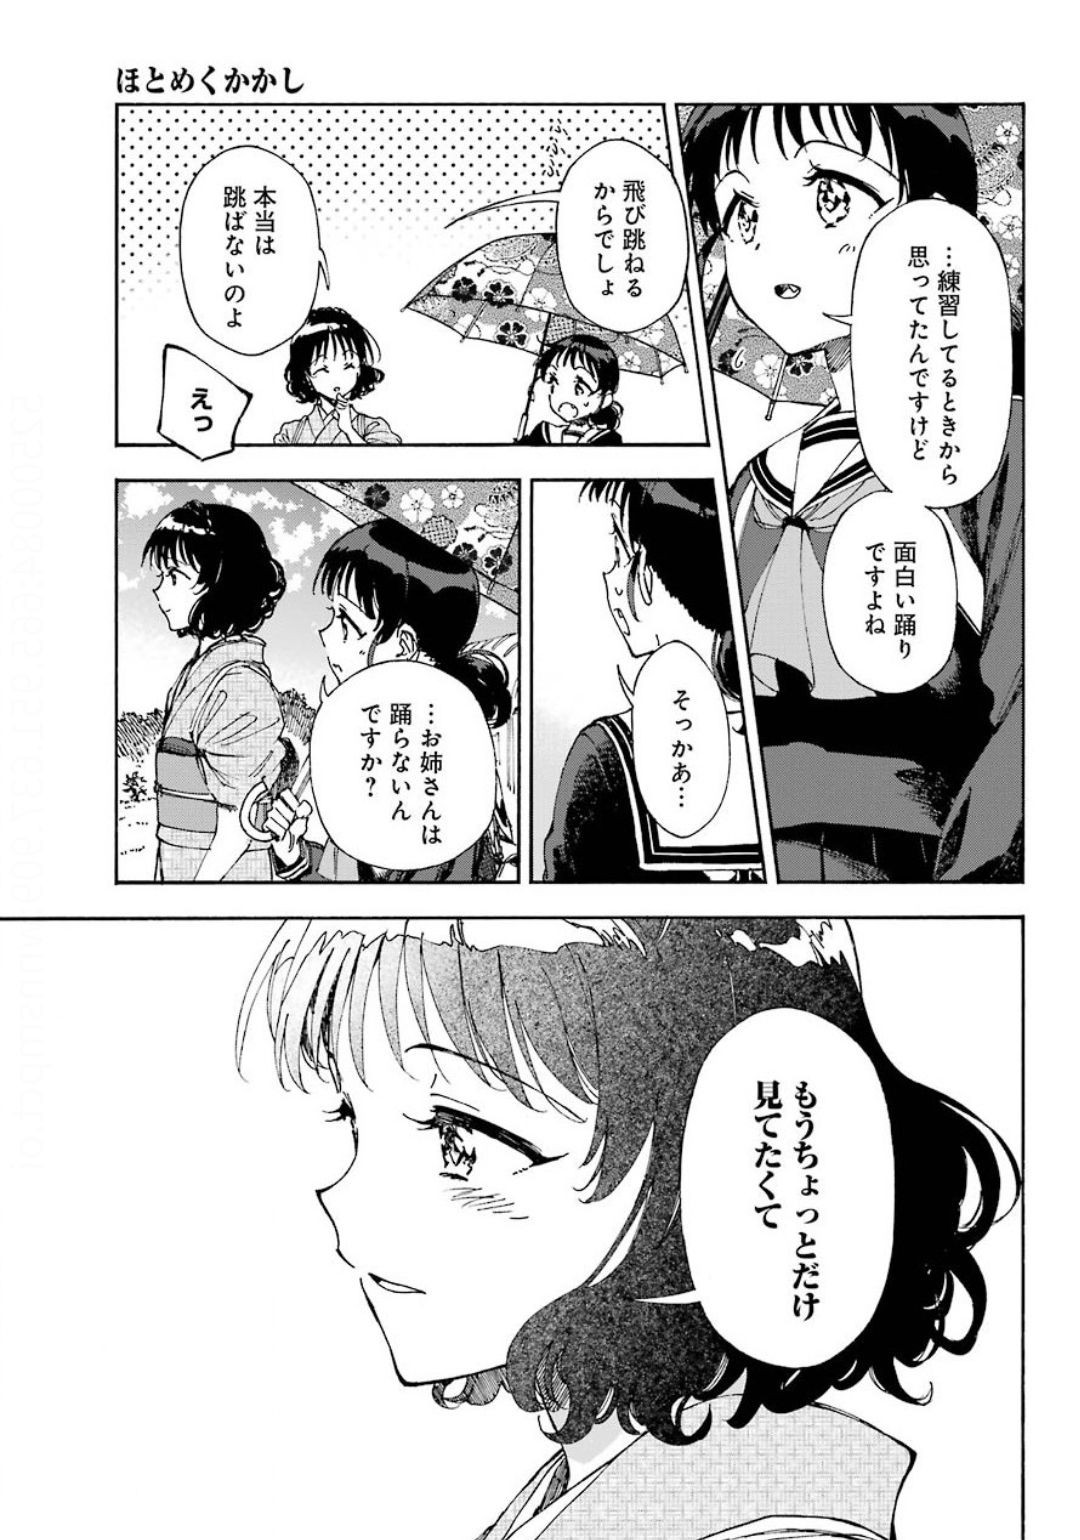 Hotomeku-kakashi - Chapter 05 - Page 35